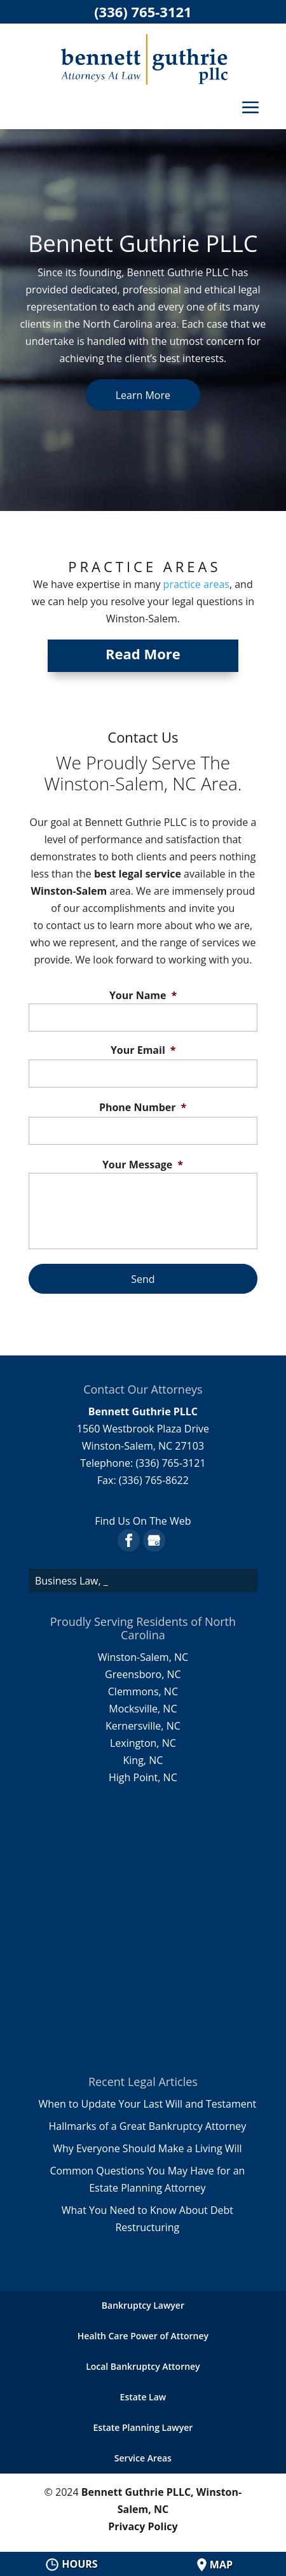 Bennett & Guthrie PLLC - Winston Salem NC Lawyers